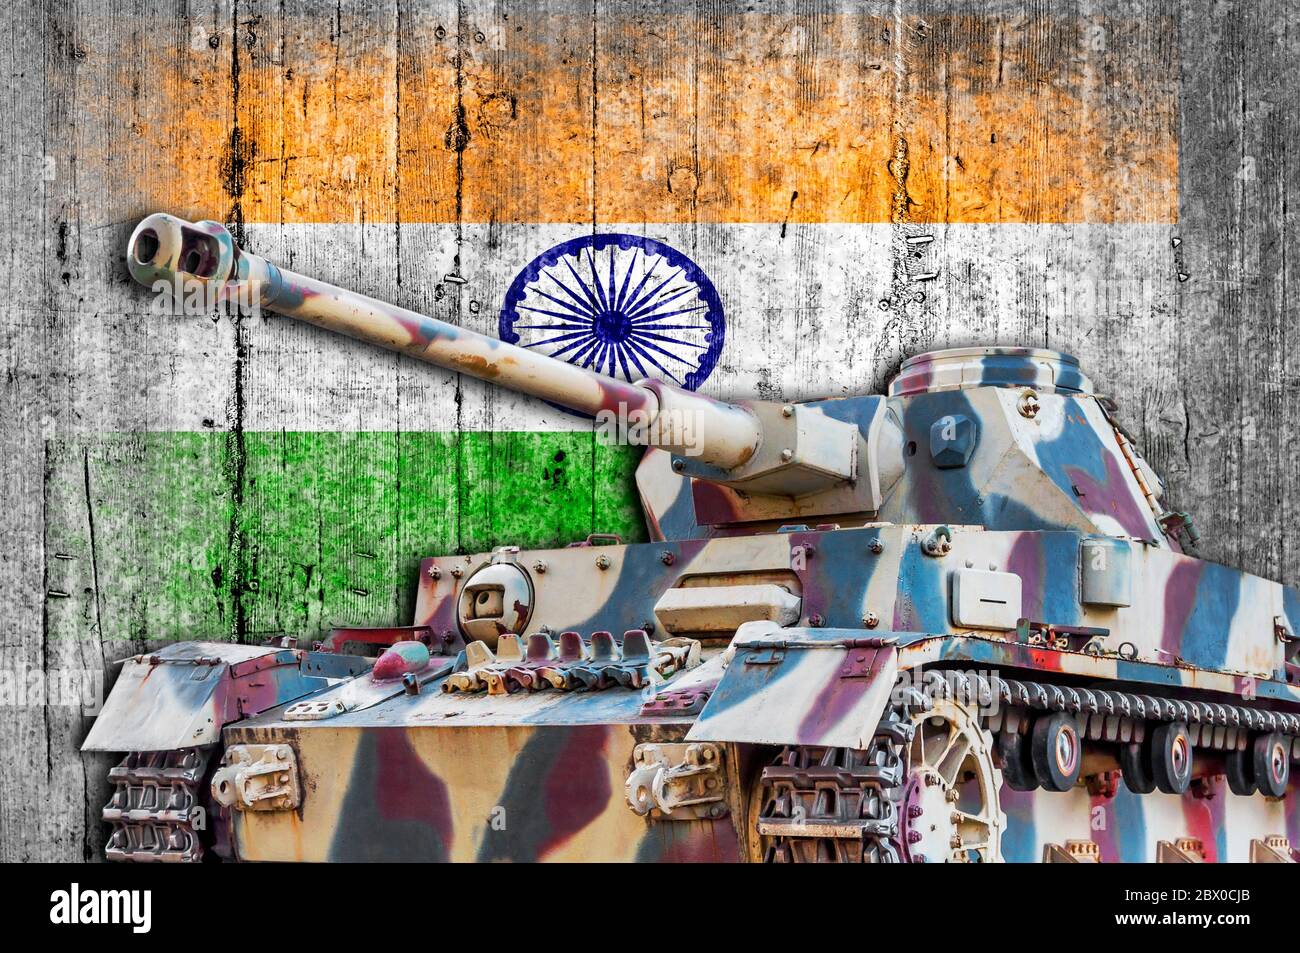 https://c8.alamy.com/comp/2BX0CJB/military-tank-with-concrete-india-flag-2BX0CJB.jpg